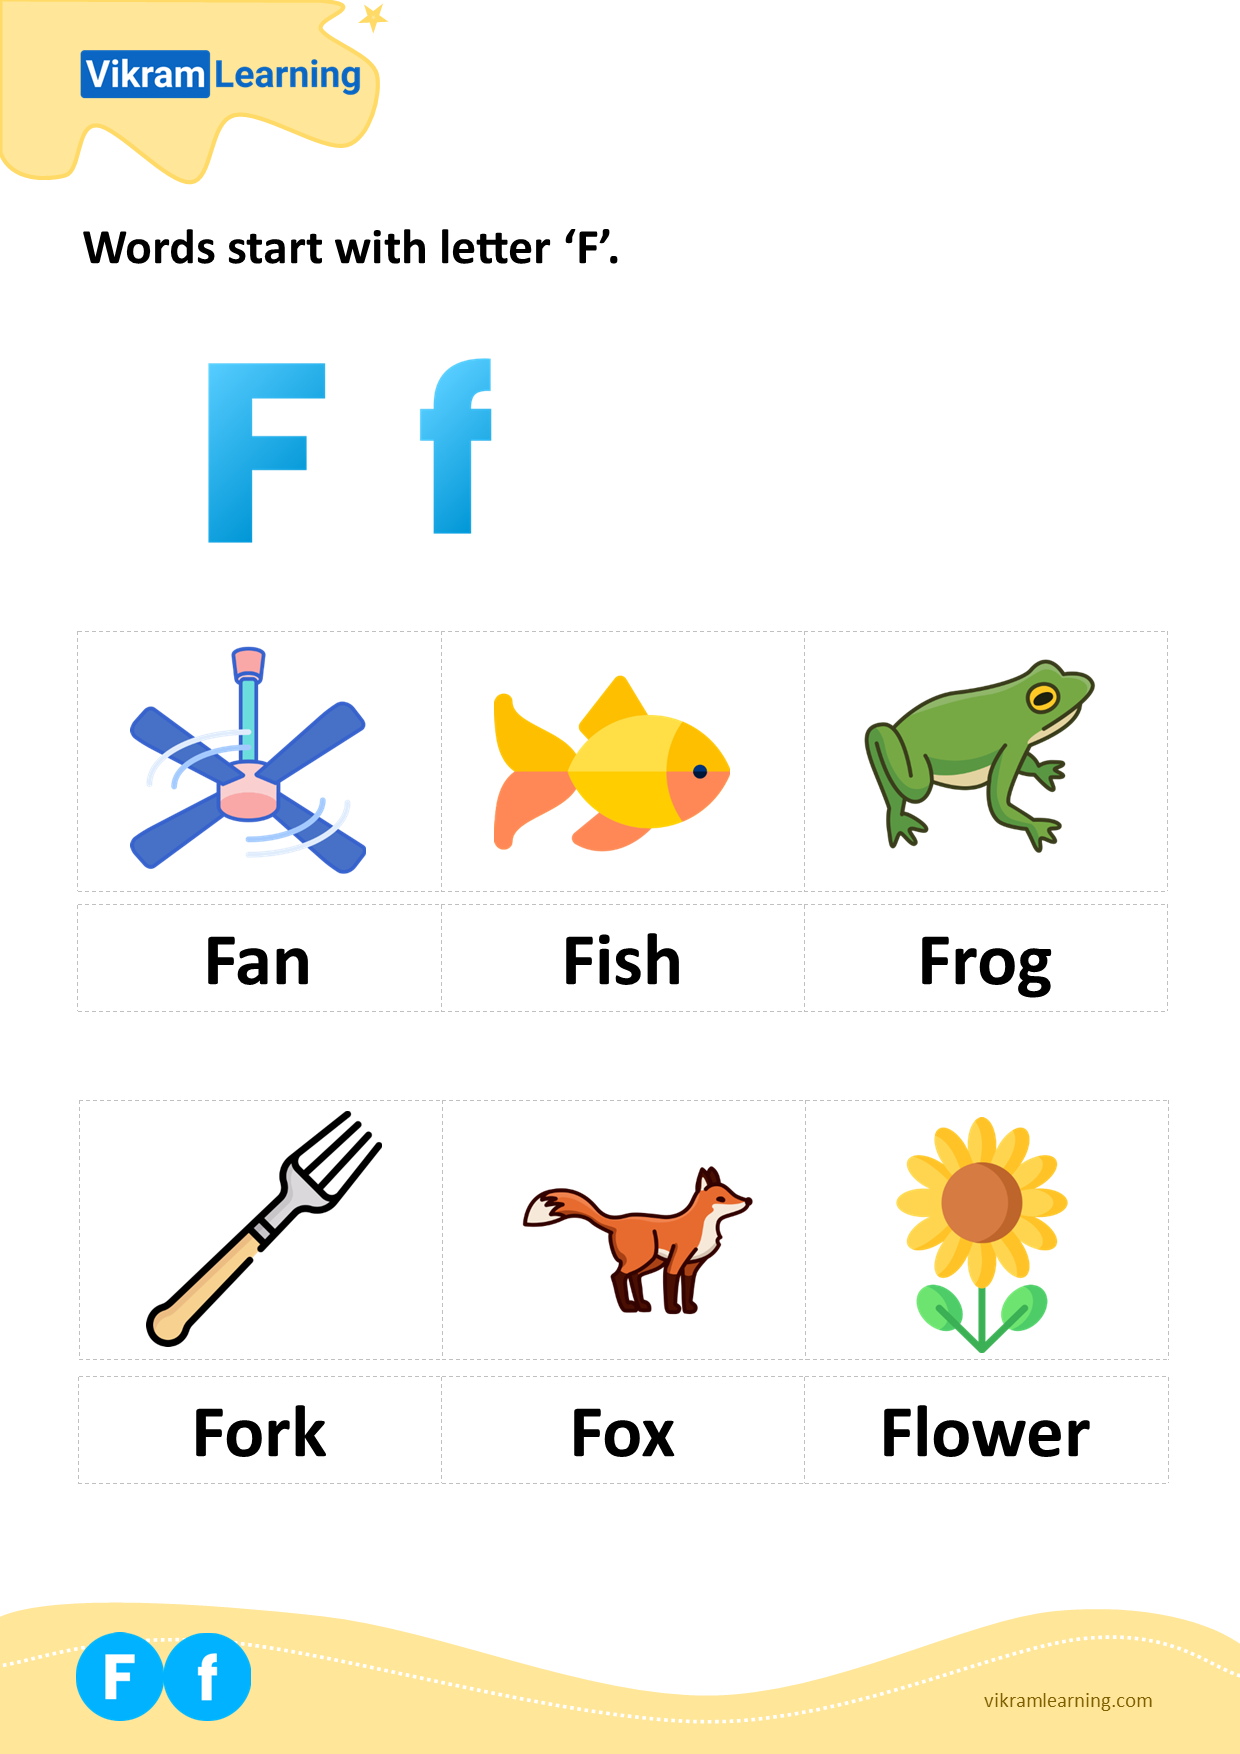 Download words start with letter 'f' worksheets